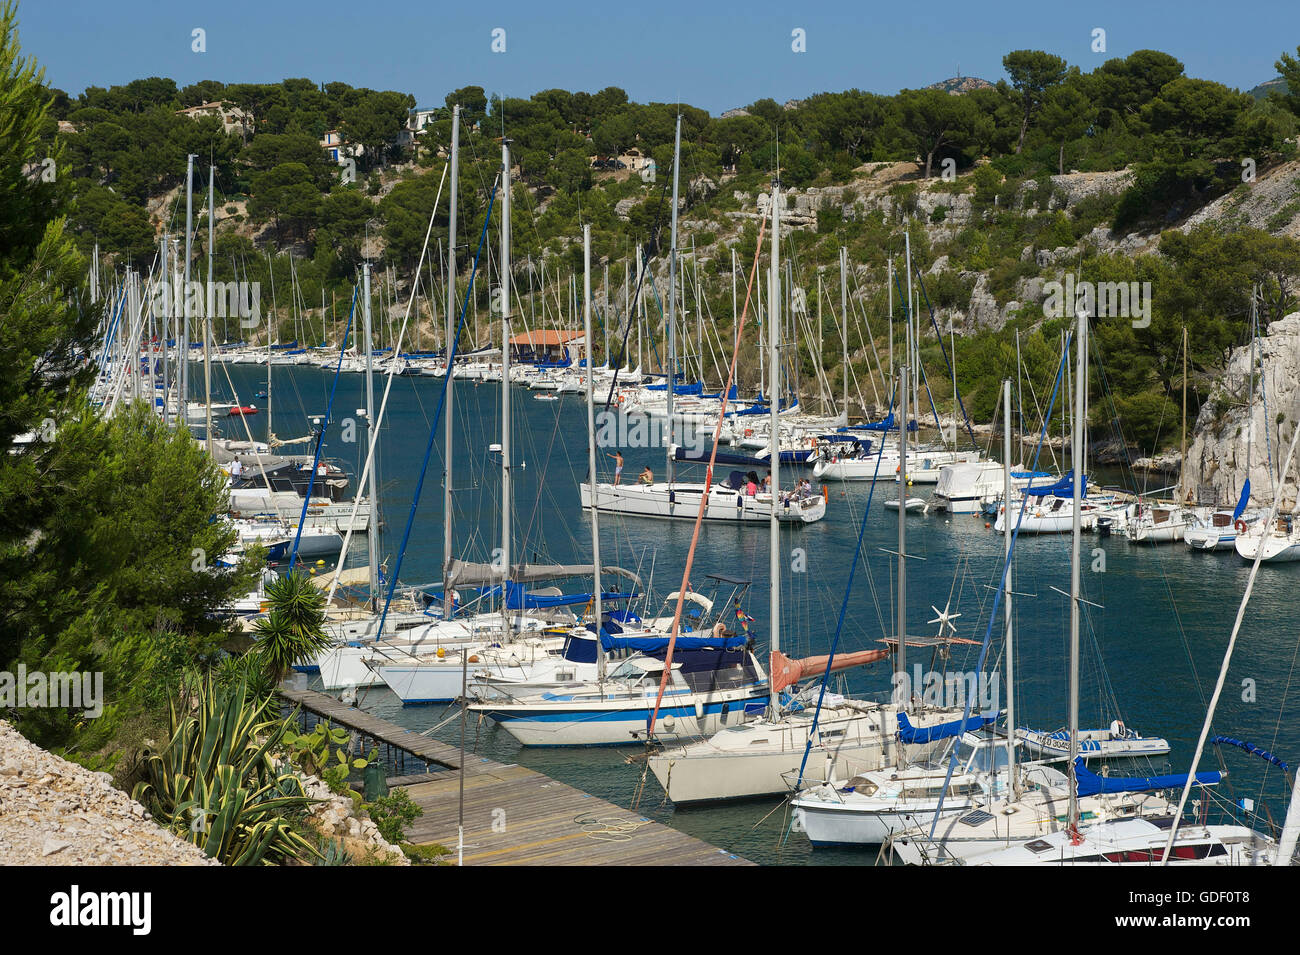 Marina, Calanque de Port Miou, Cote d Azur, France Banque D'Images